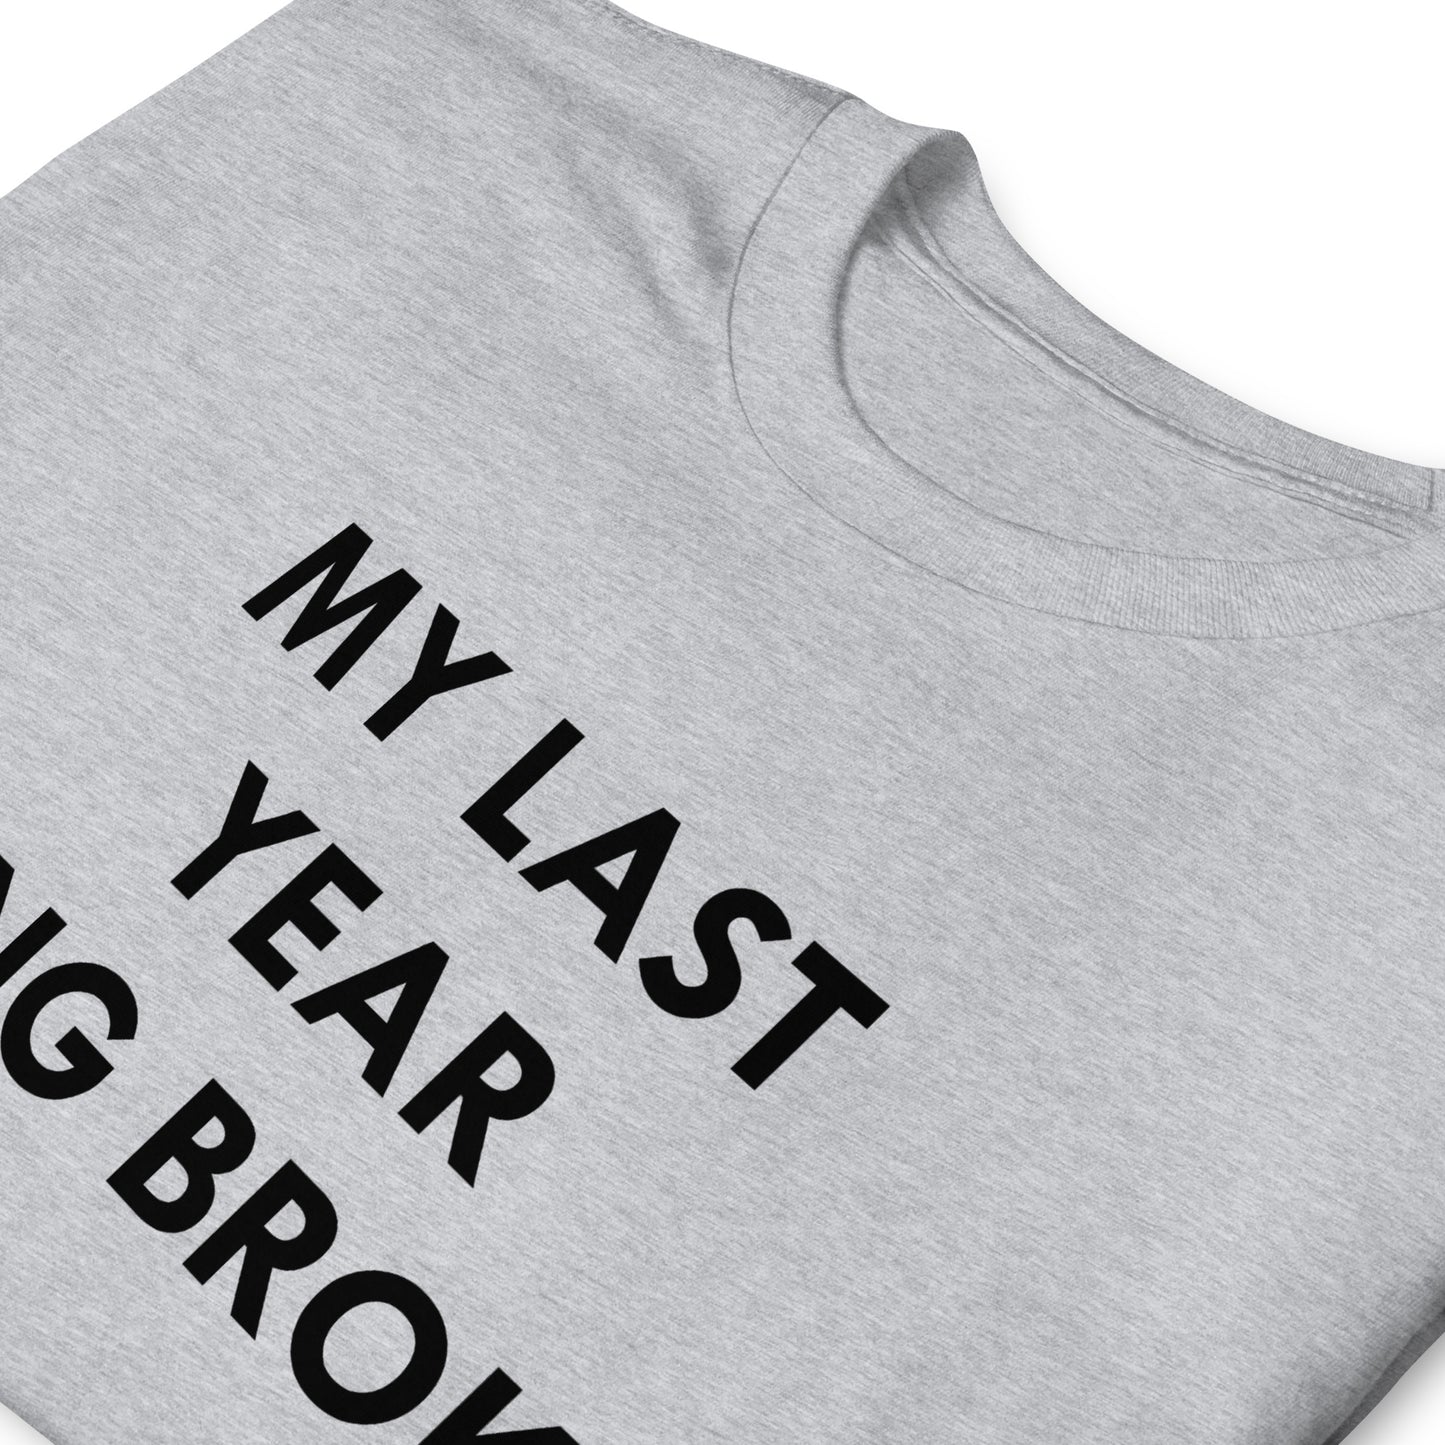 My Last Year Being Broke  Short-Sleeve Unisex T-Shirt